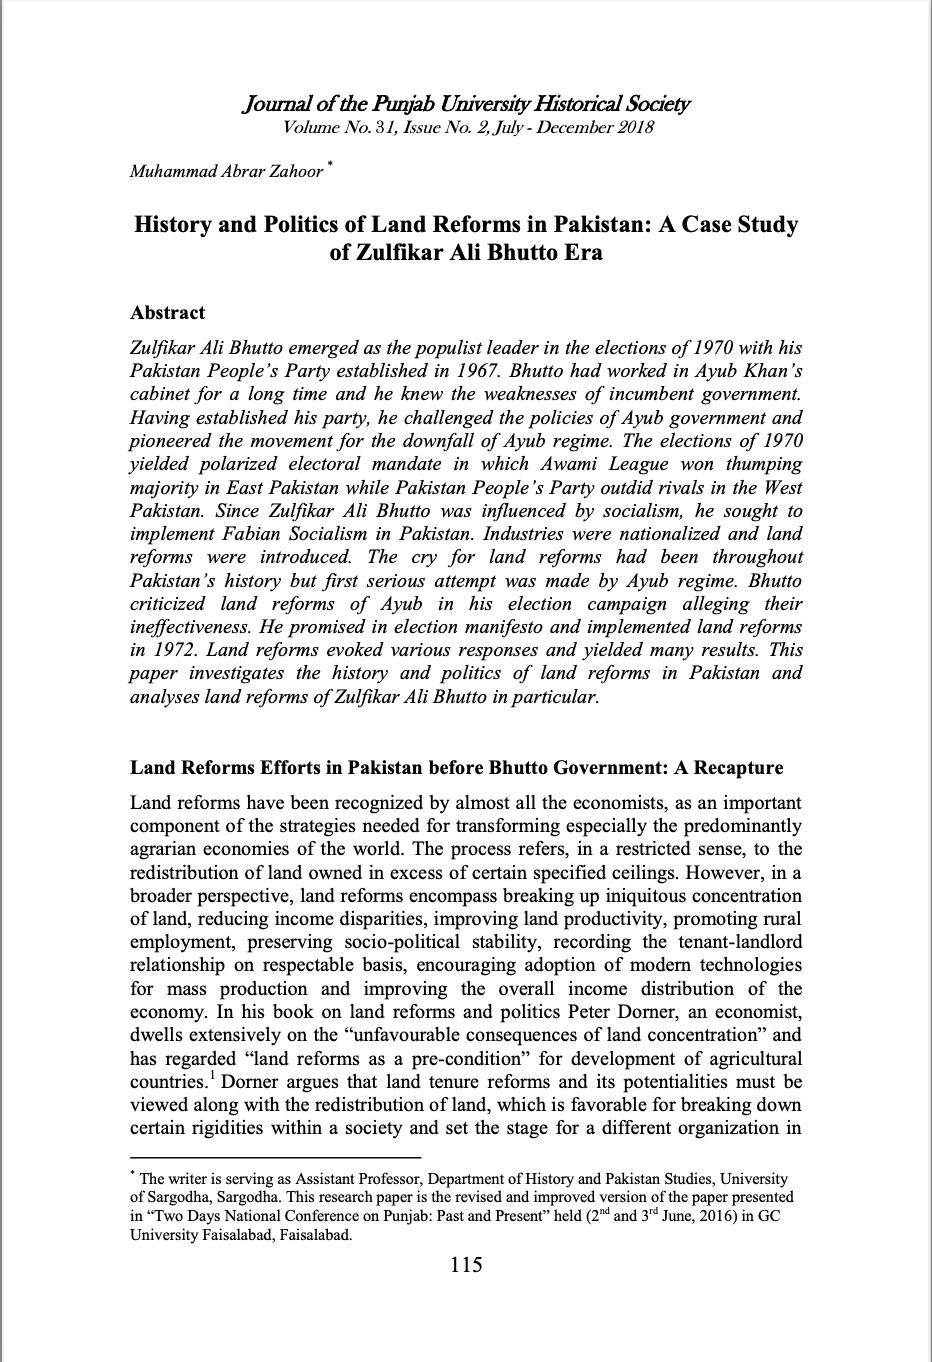 History and Politics of Land Reforms in Pakistan: A Case Study of Zulfikar Ali Bhutto Era